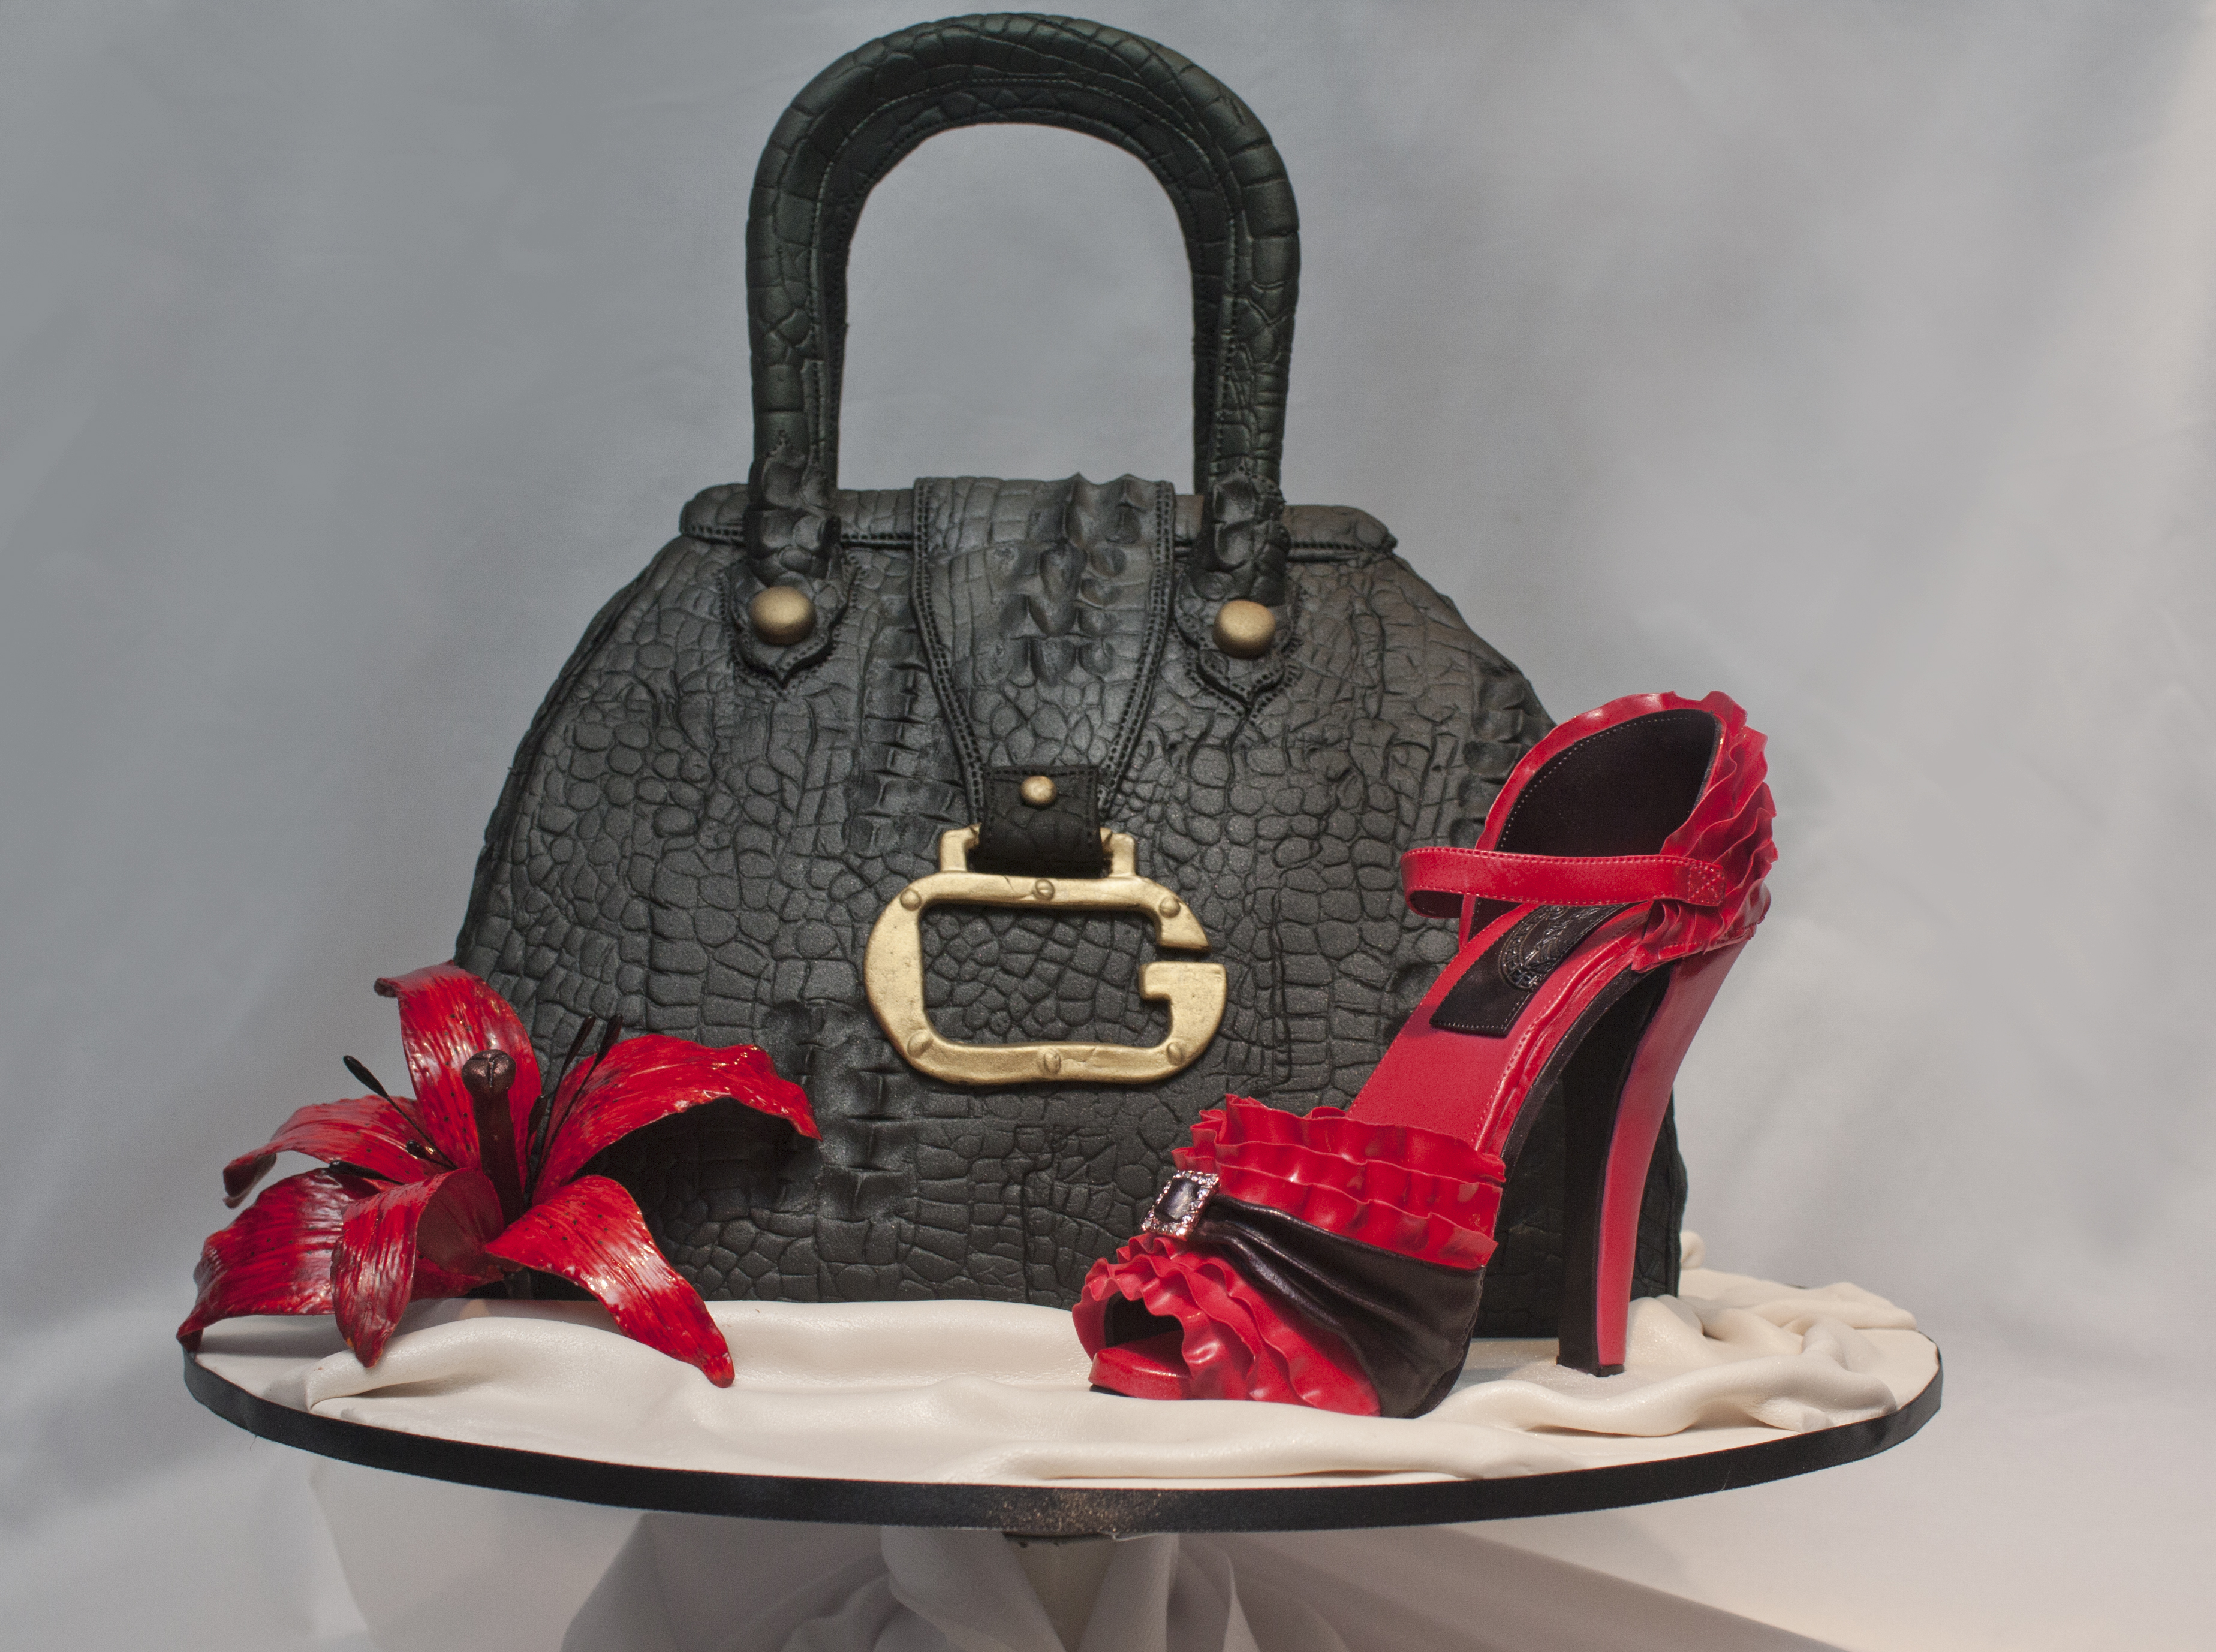 Handbag and stiletto by Jo Orr